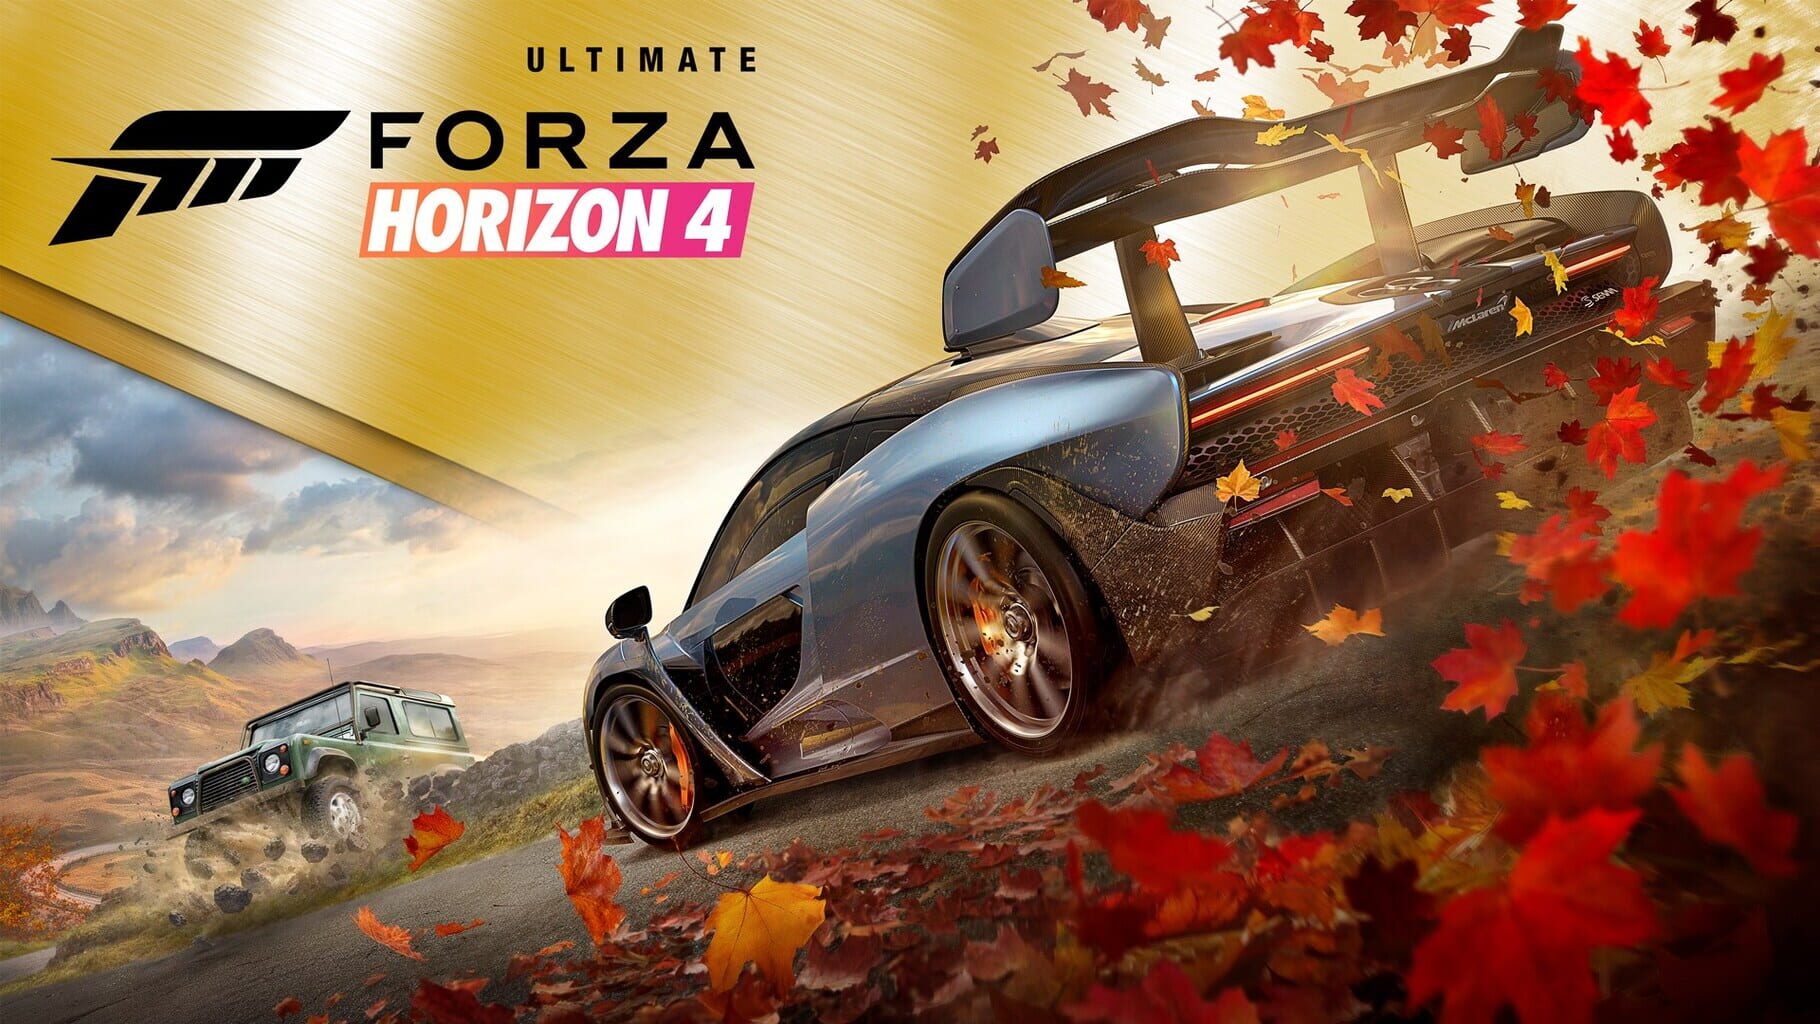 Arte - Forza Horizon 4: Ultimate Edition